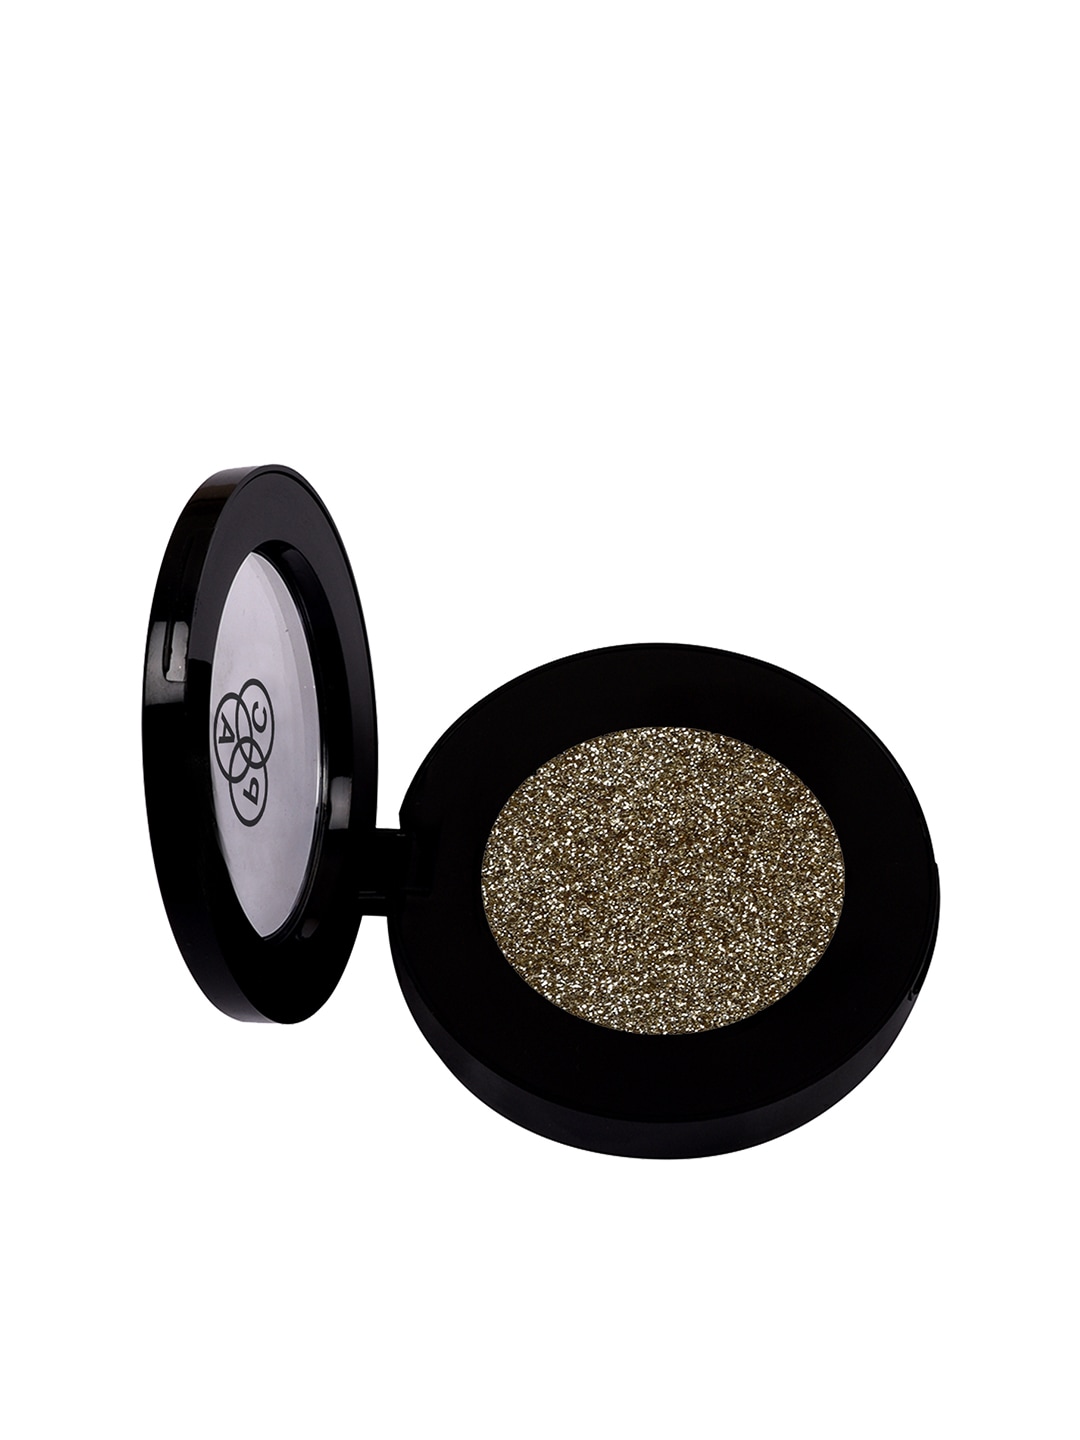 PAC 10 Disco Bar Pressed Glitter Eyeshadow 3 g Price in India